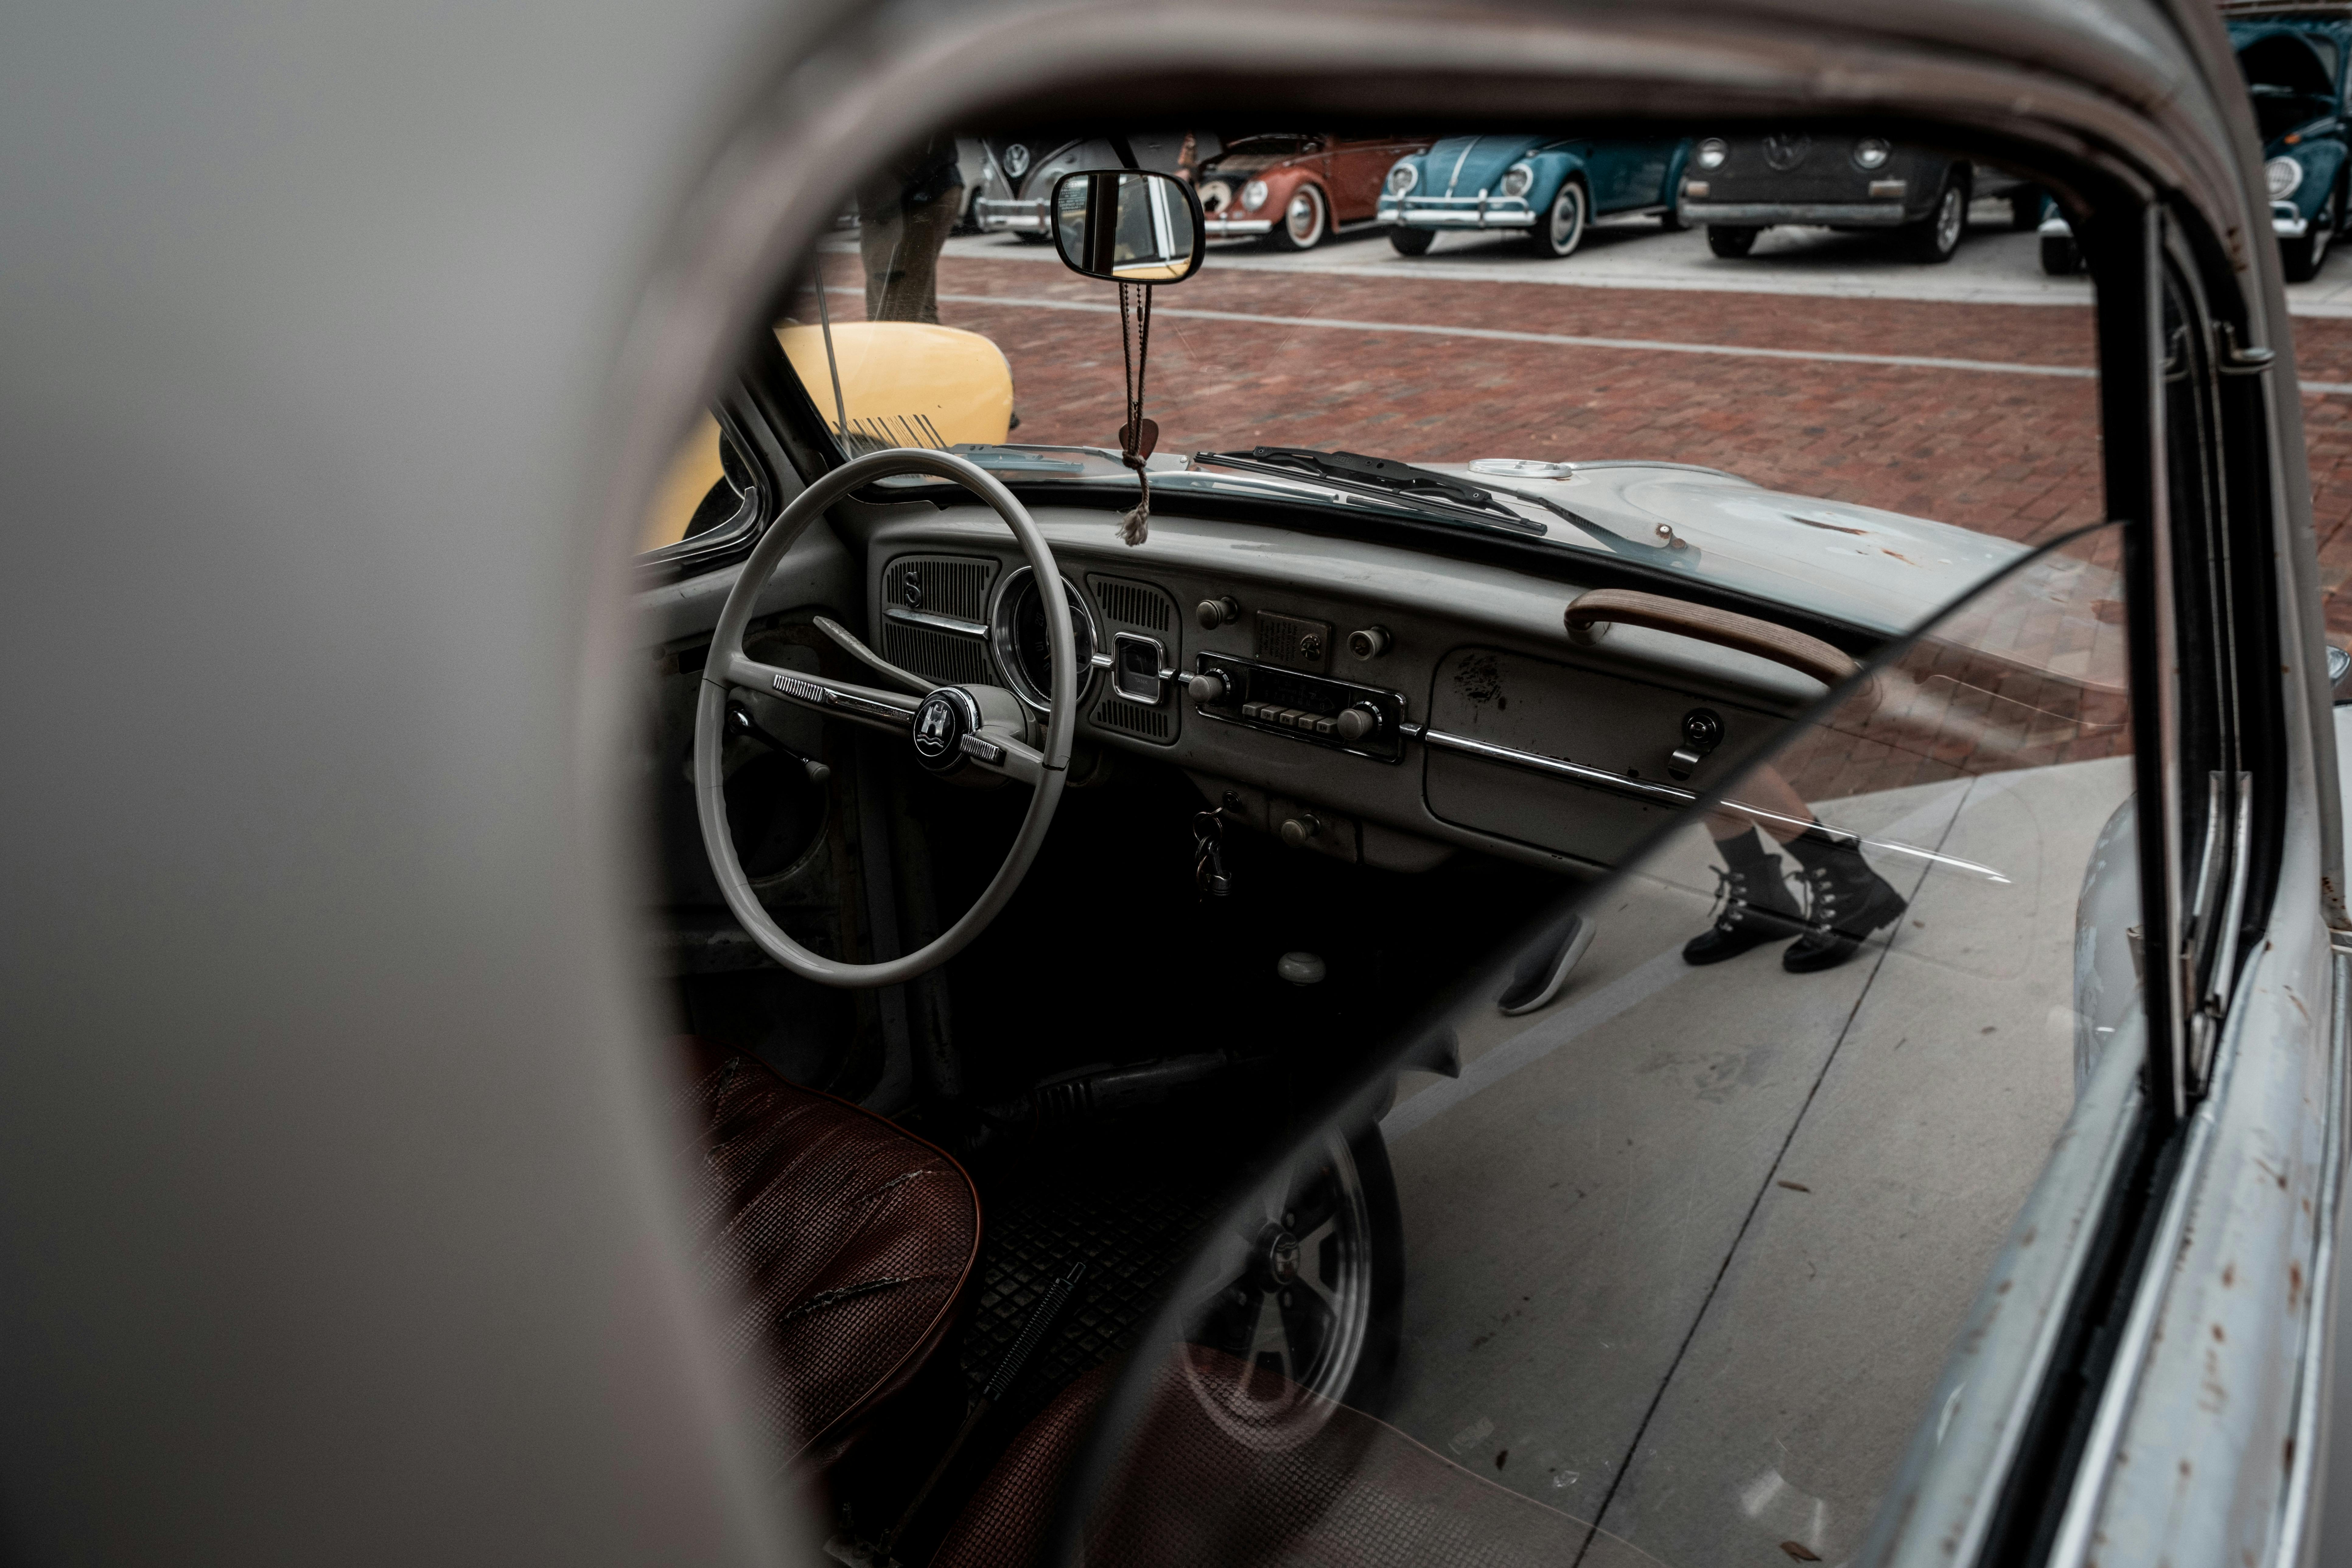 steering wheel and dashboard of an old volkswagen beetle